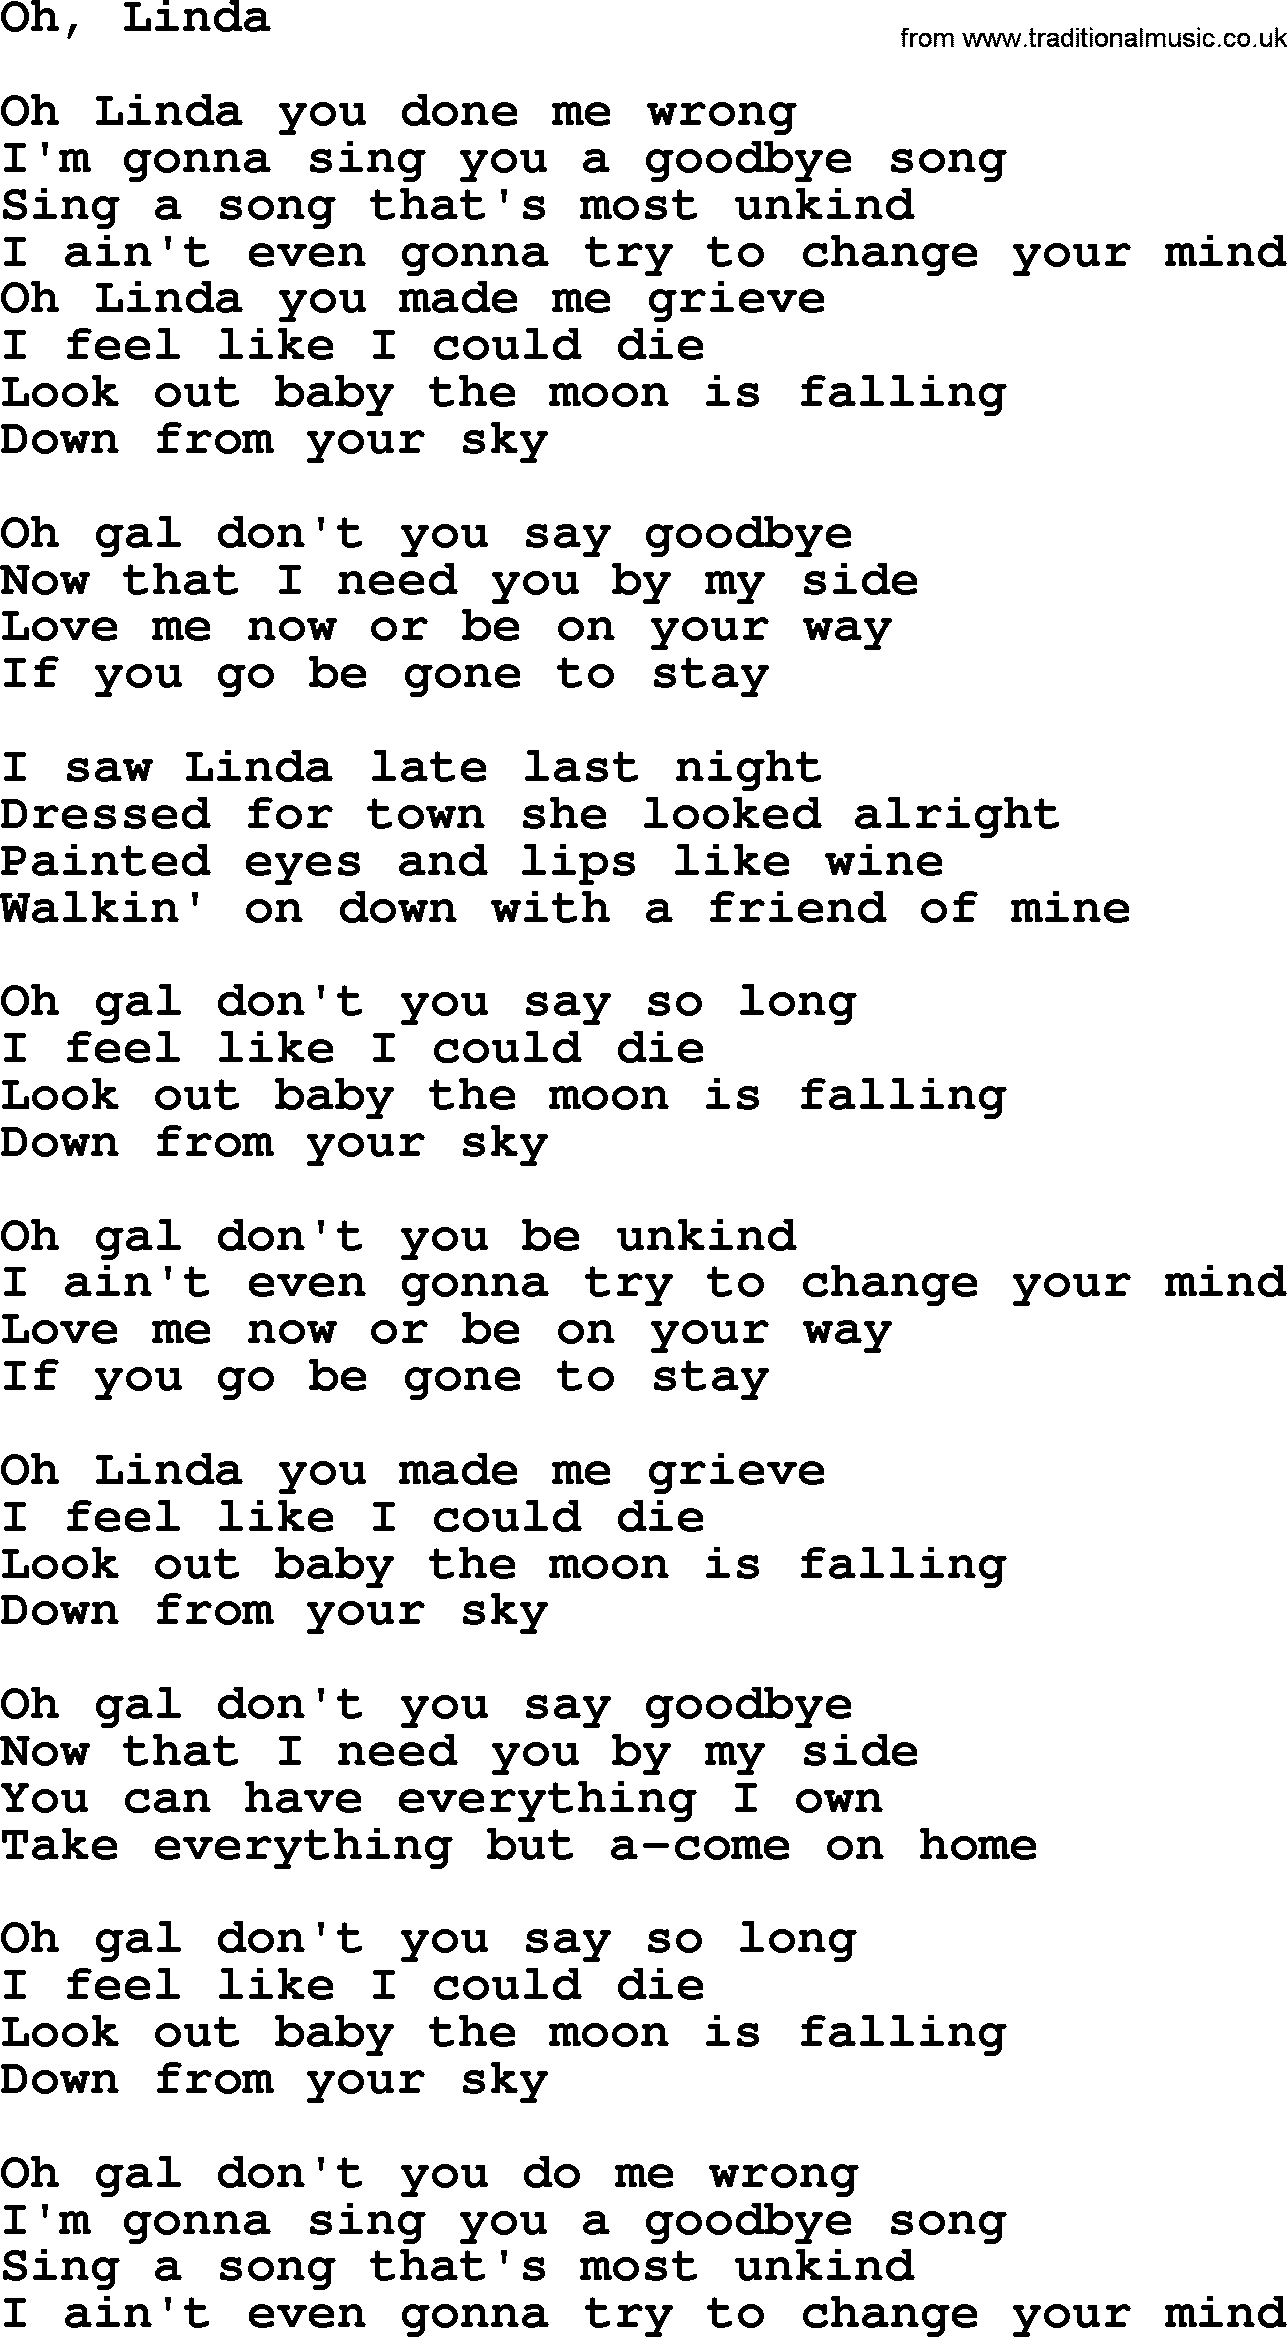 Gordon Lightfoot song Oh, Linda, lyrics